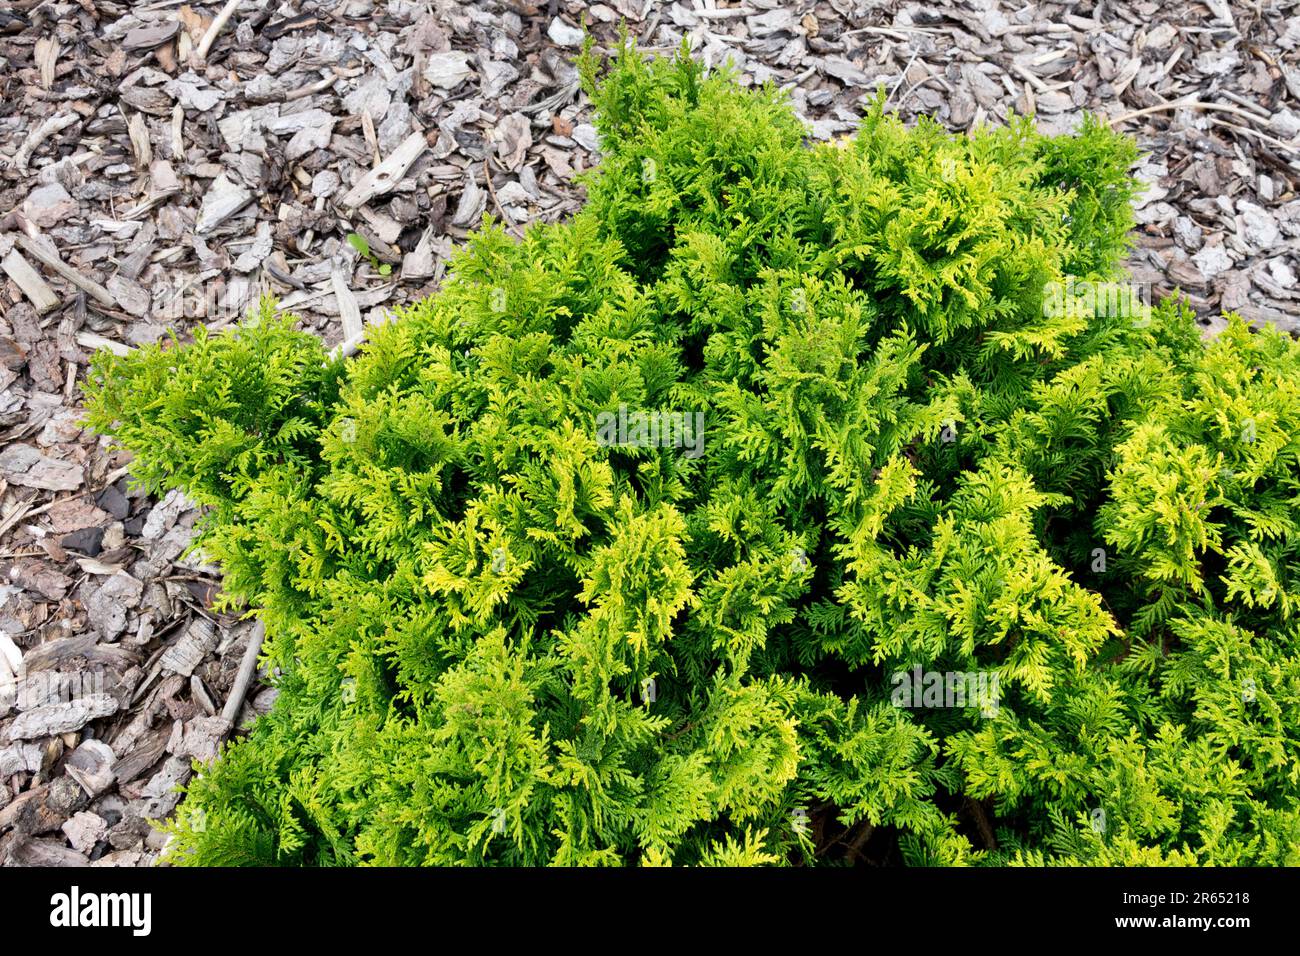 Coniferous, Dwarf, Chamaecyparis pisifera "Nana Berghs", Chamaecyparis growing in bark mulch, garden Stock Photo